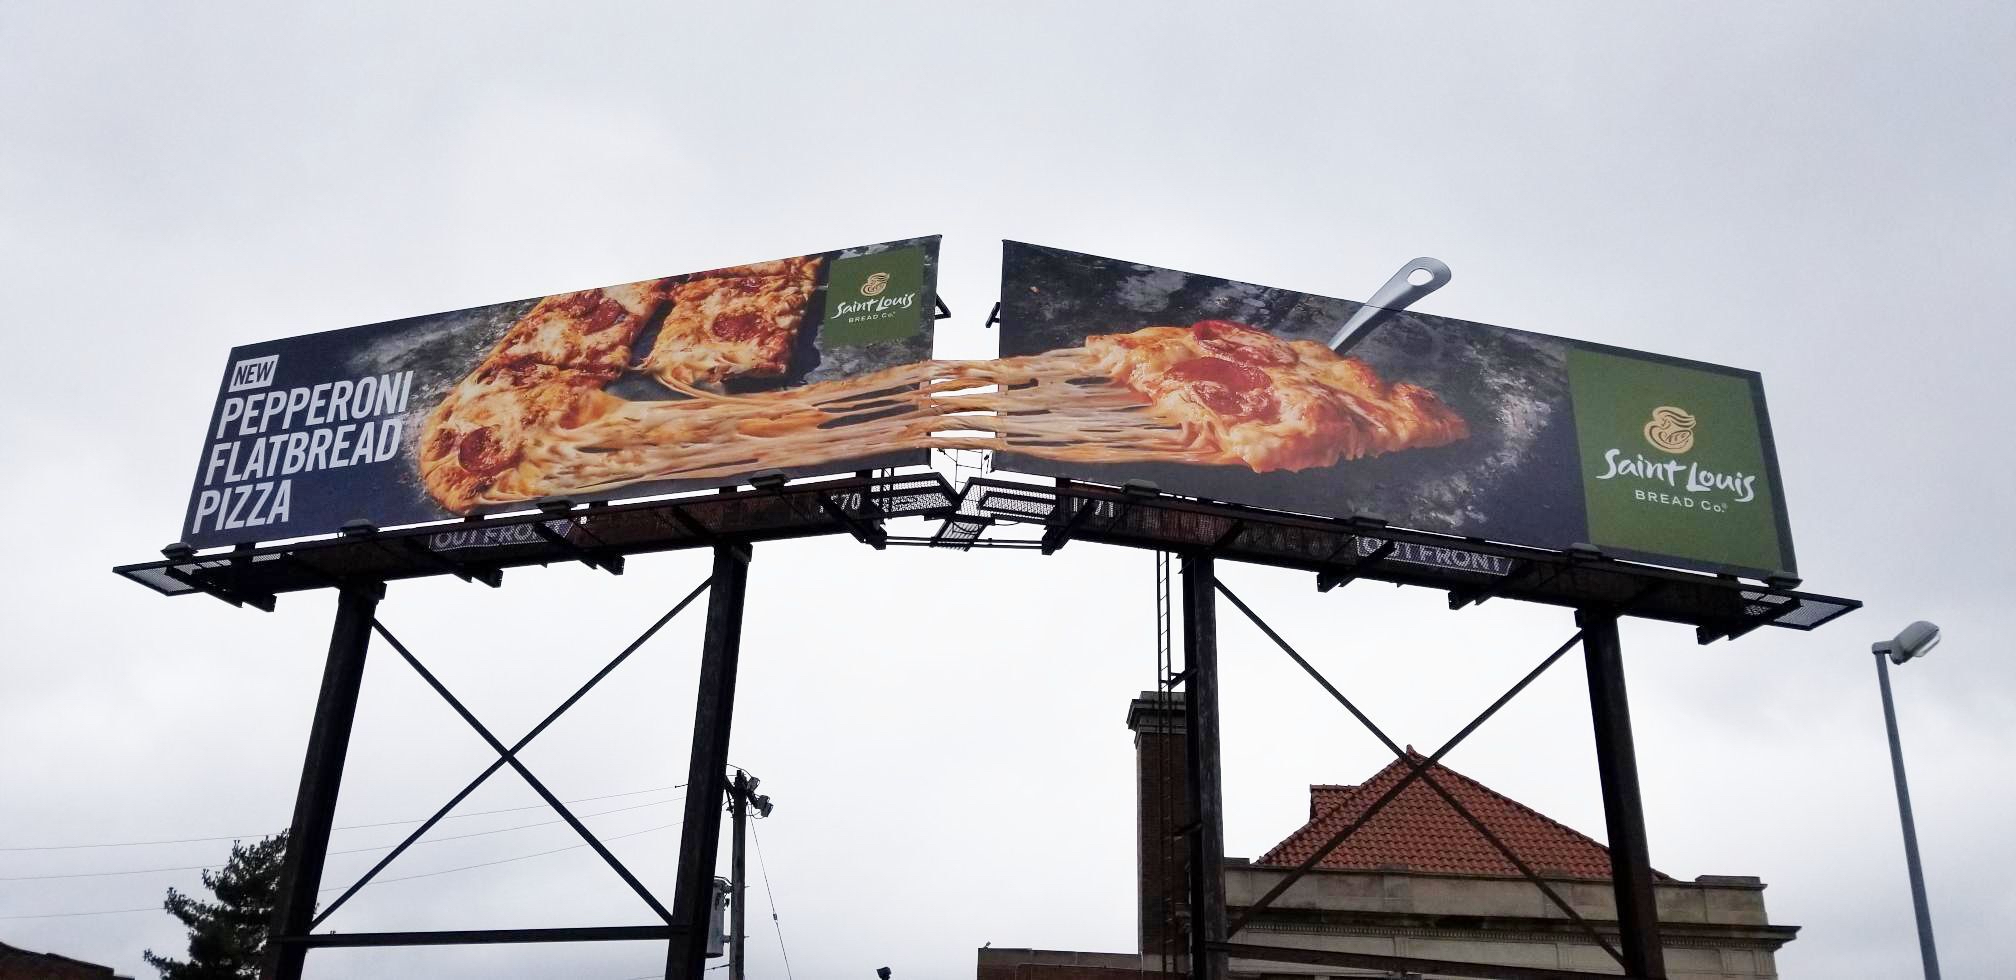 saint louis billboard design